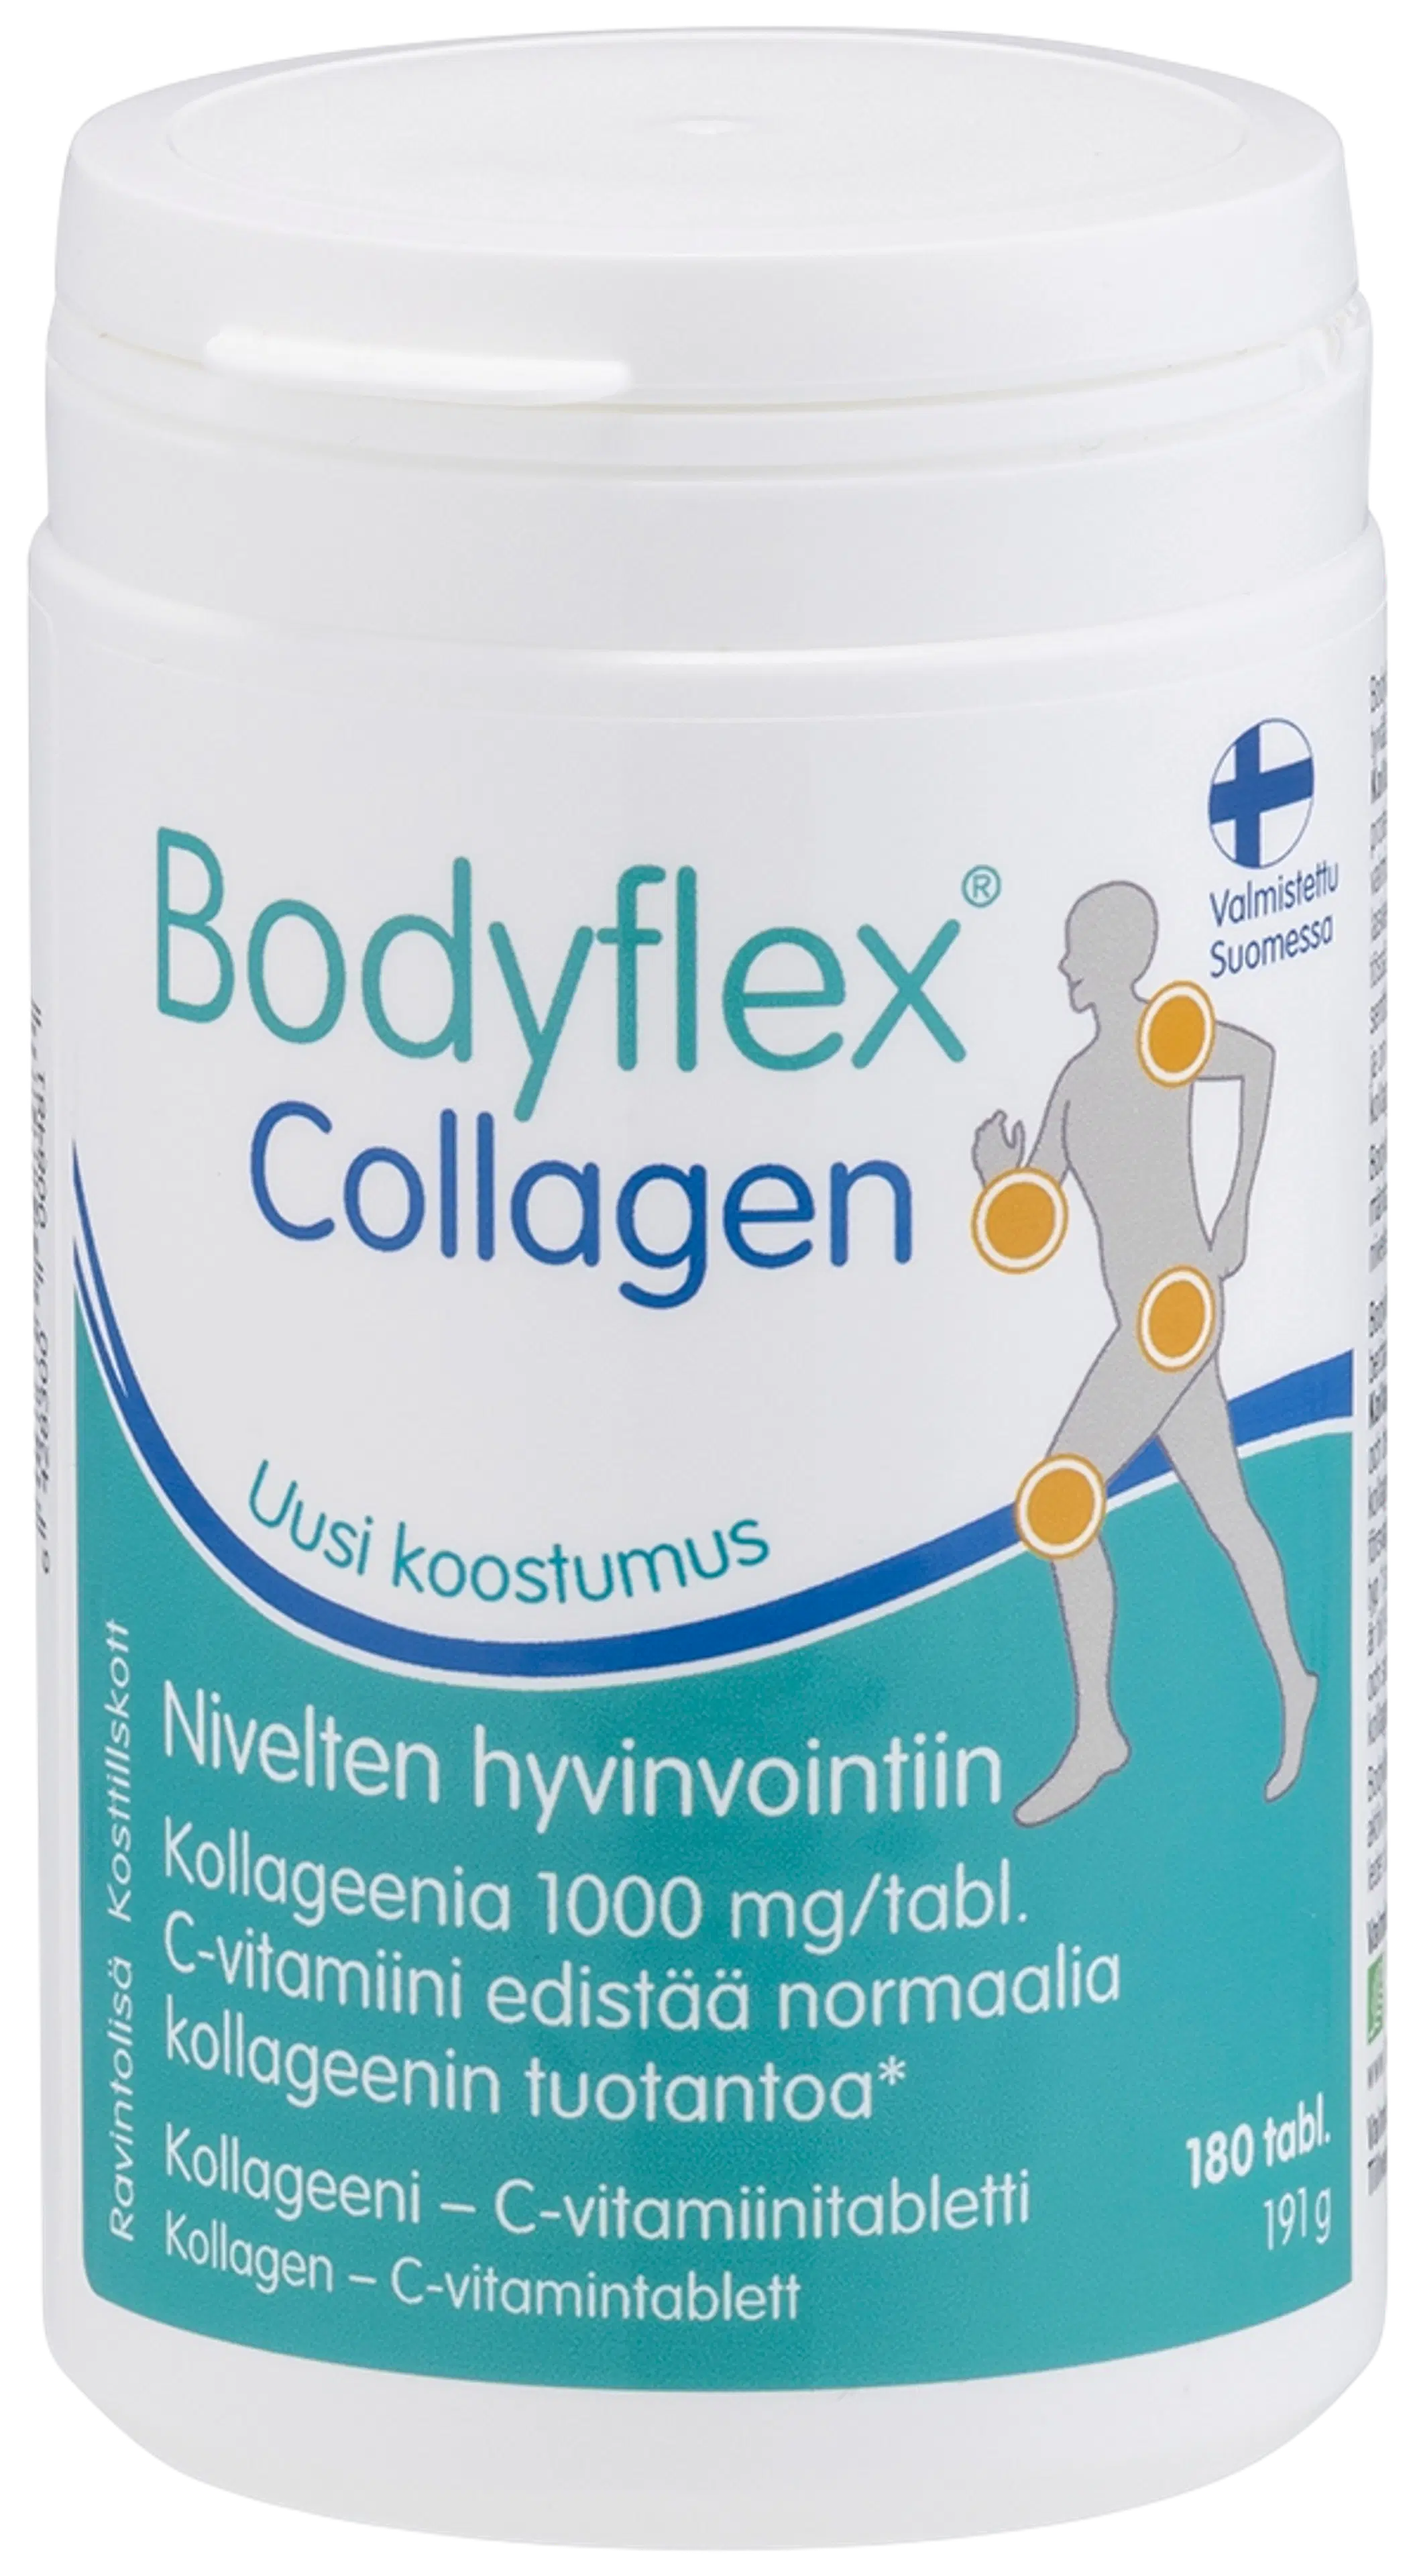 Bodyflex Collagen kollageeni-C-vitamiinitabletti 180 tabl